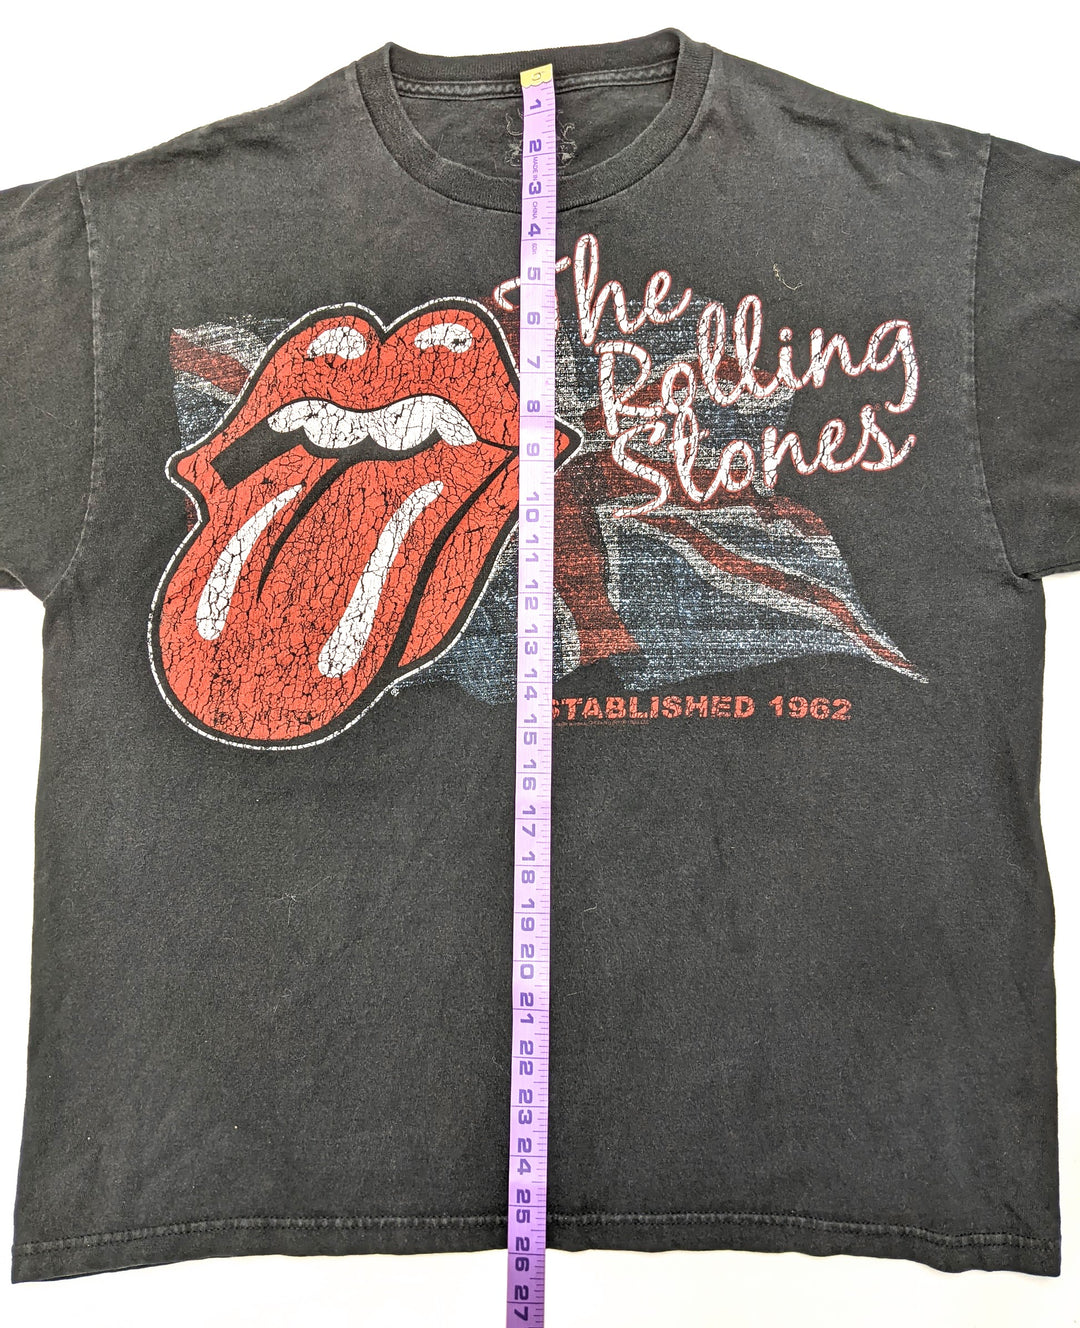 2005 The Rolling Stones T-Shirt 1 pc 1 lb B0202208 - Raghouse